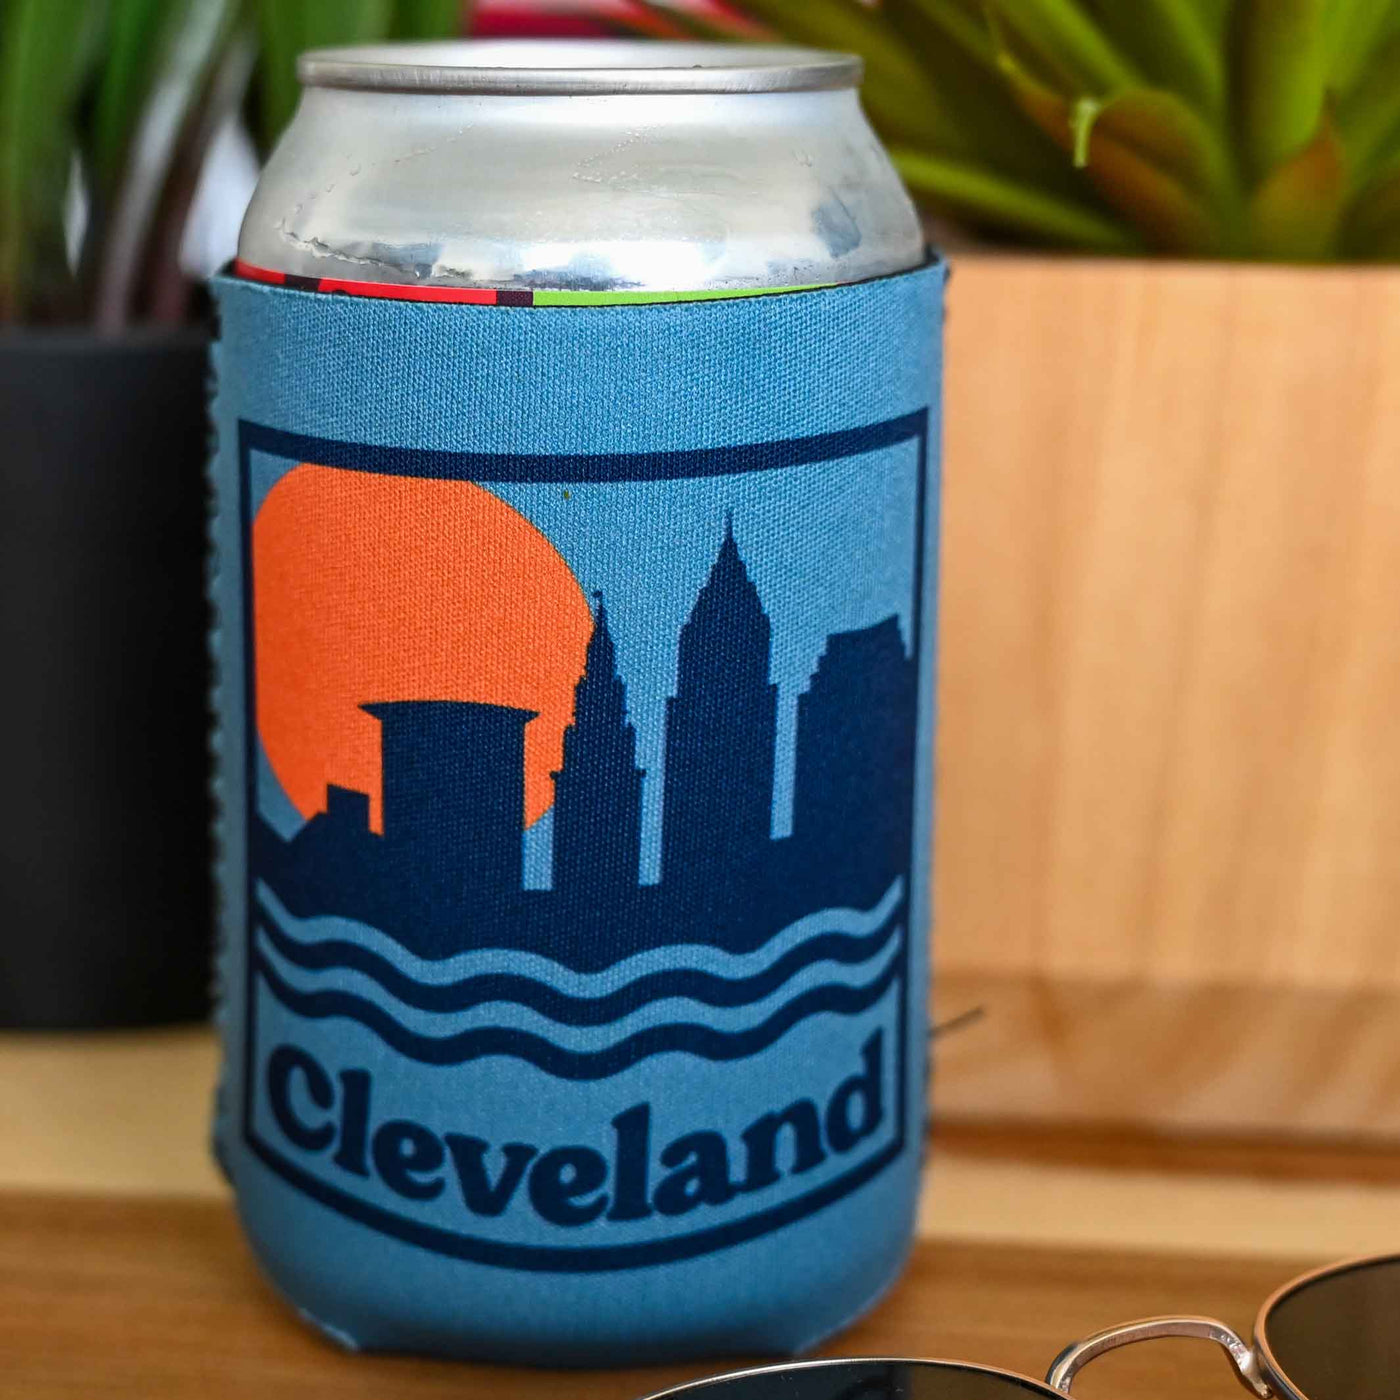 Cleveland Skyline Sunset Neoprene Can Cooler